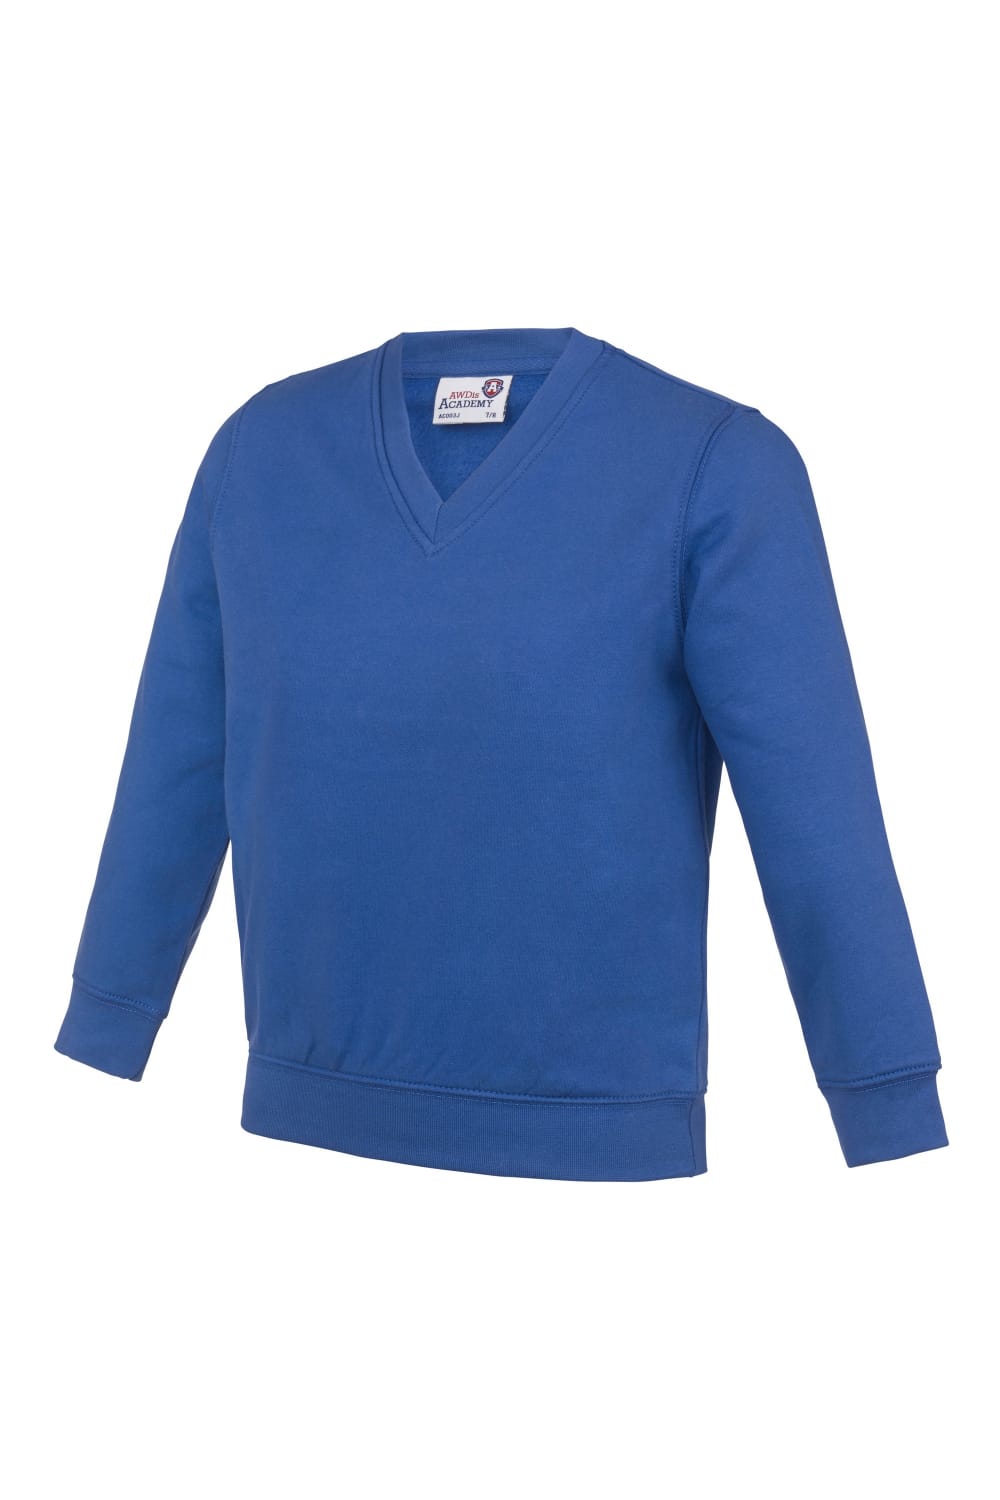 AWDis Academy Childrens/Kids Junior V Neck School Jumper/Sweatshirt (Pack of 2) (Royal Blue)